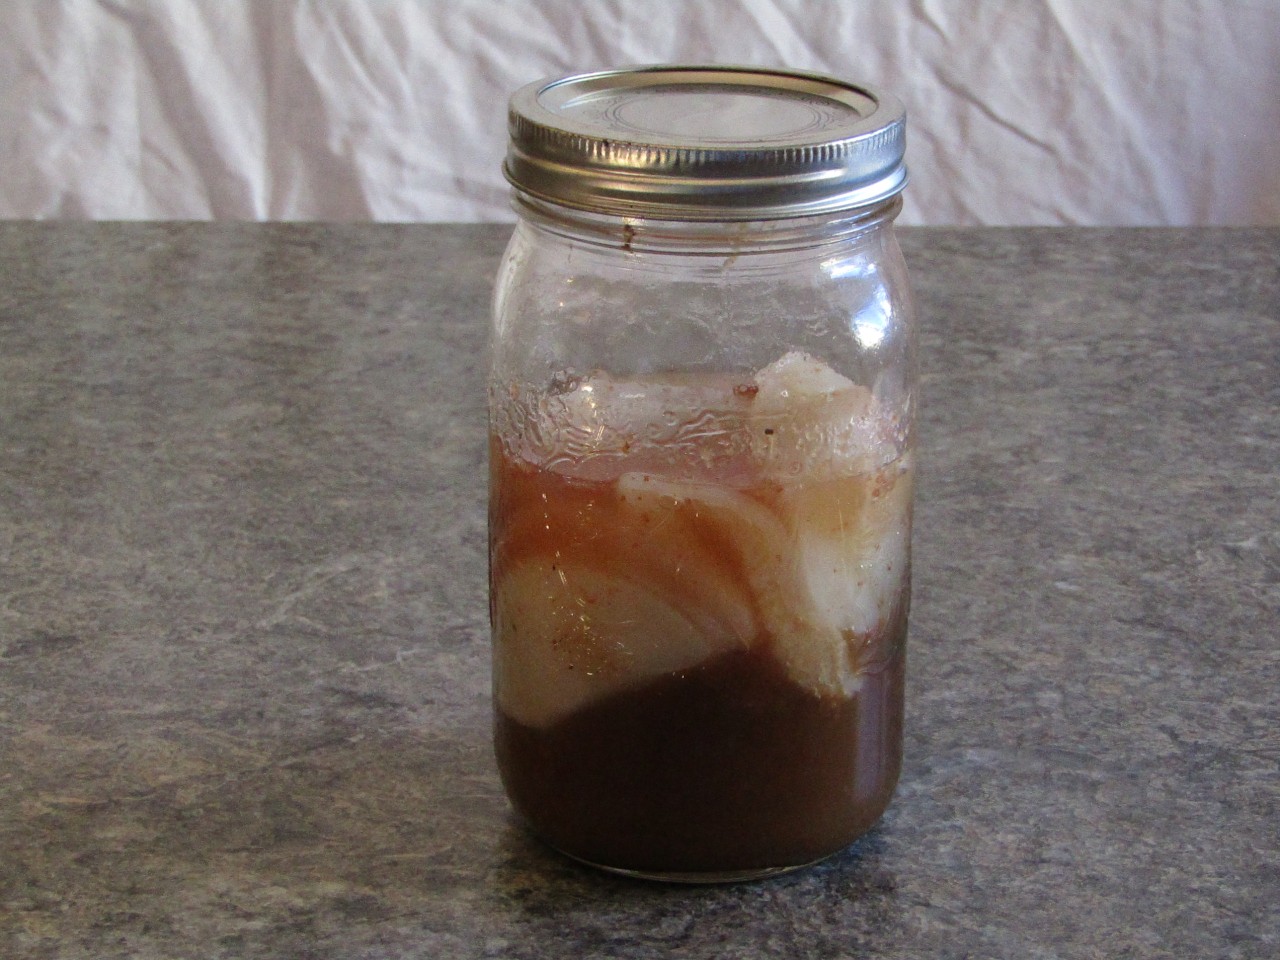 A mason jar filled with kombucha SCOBYs